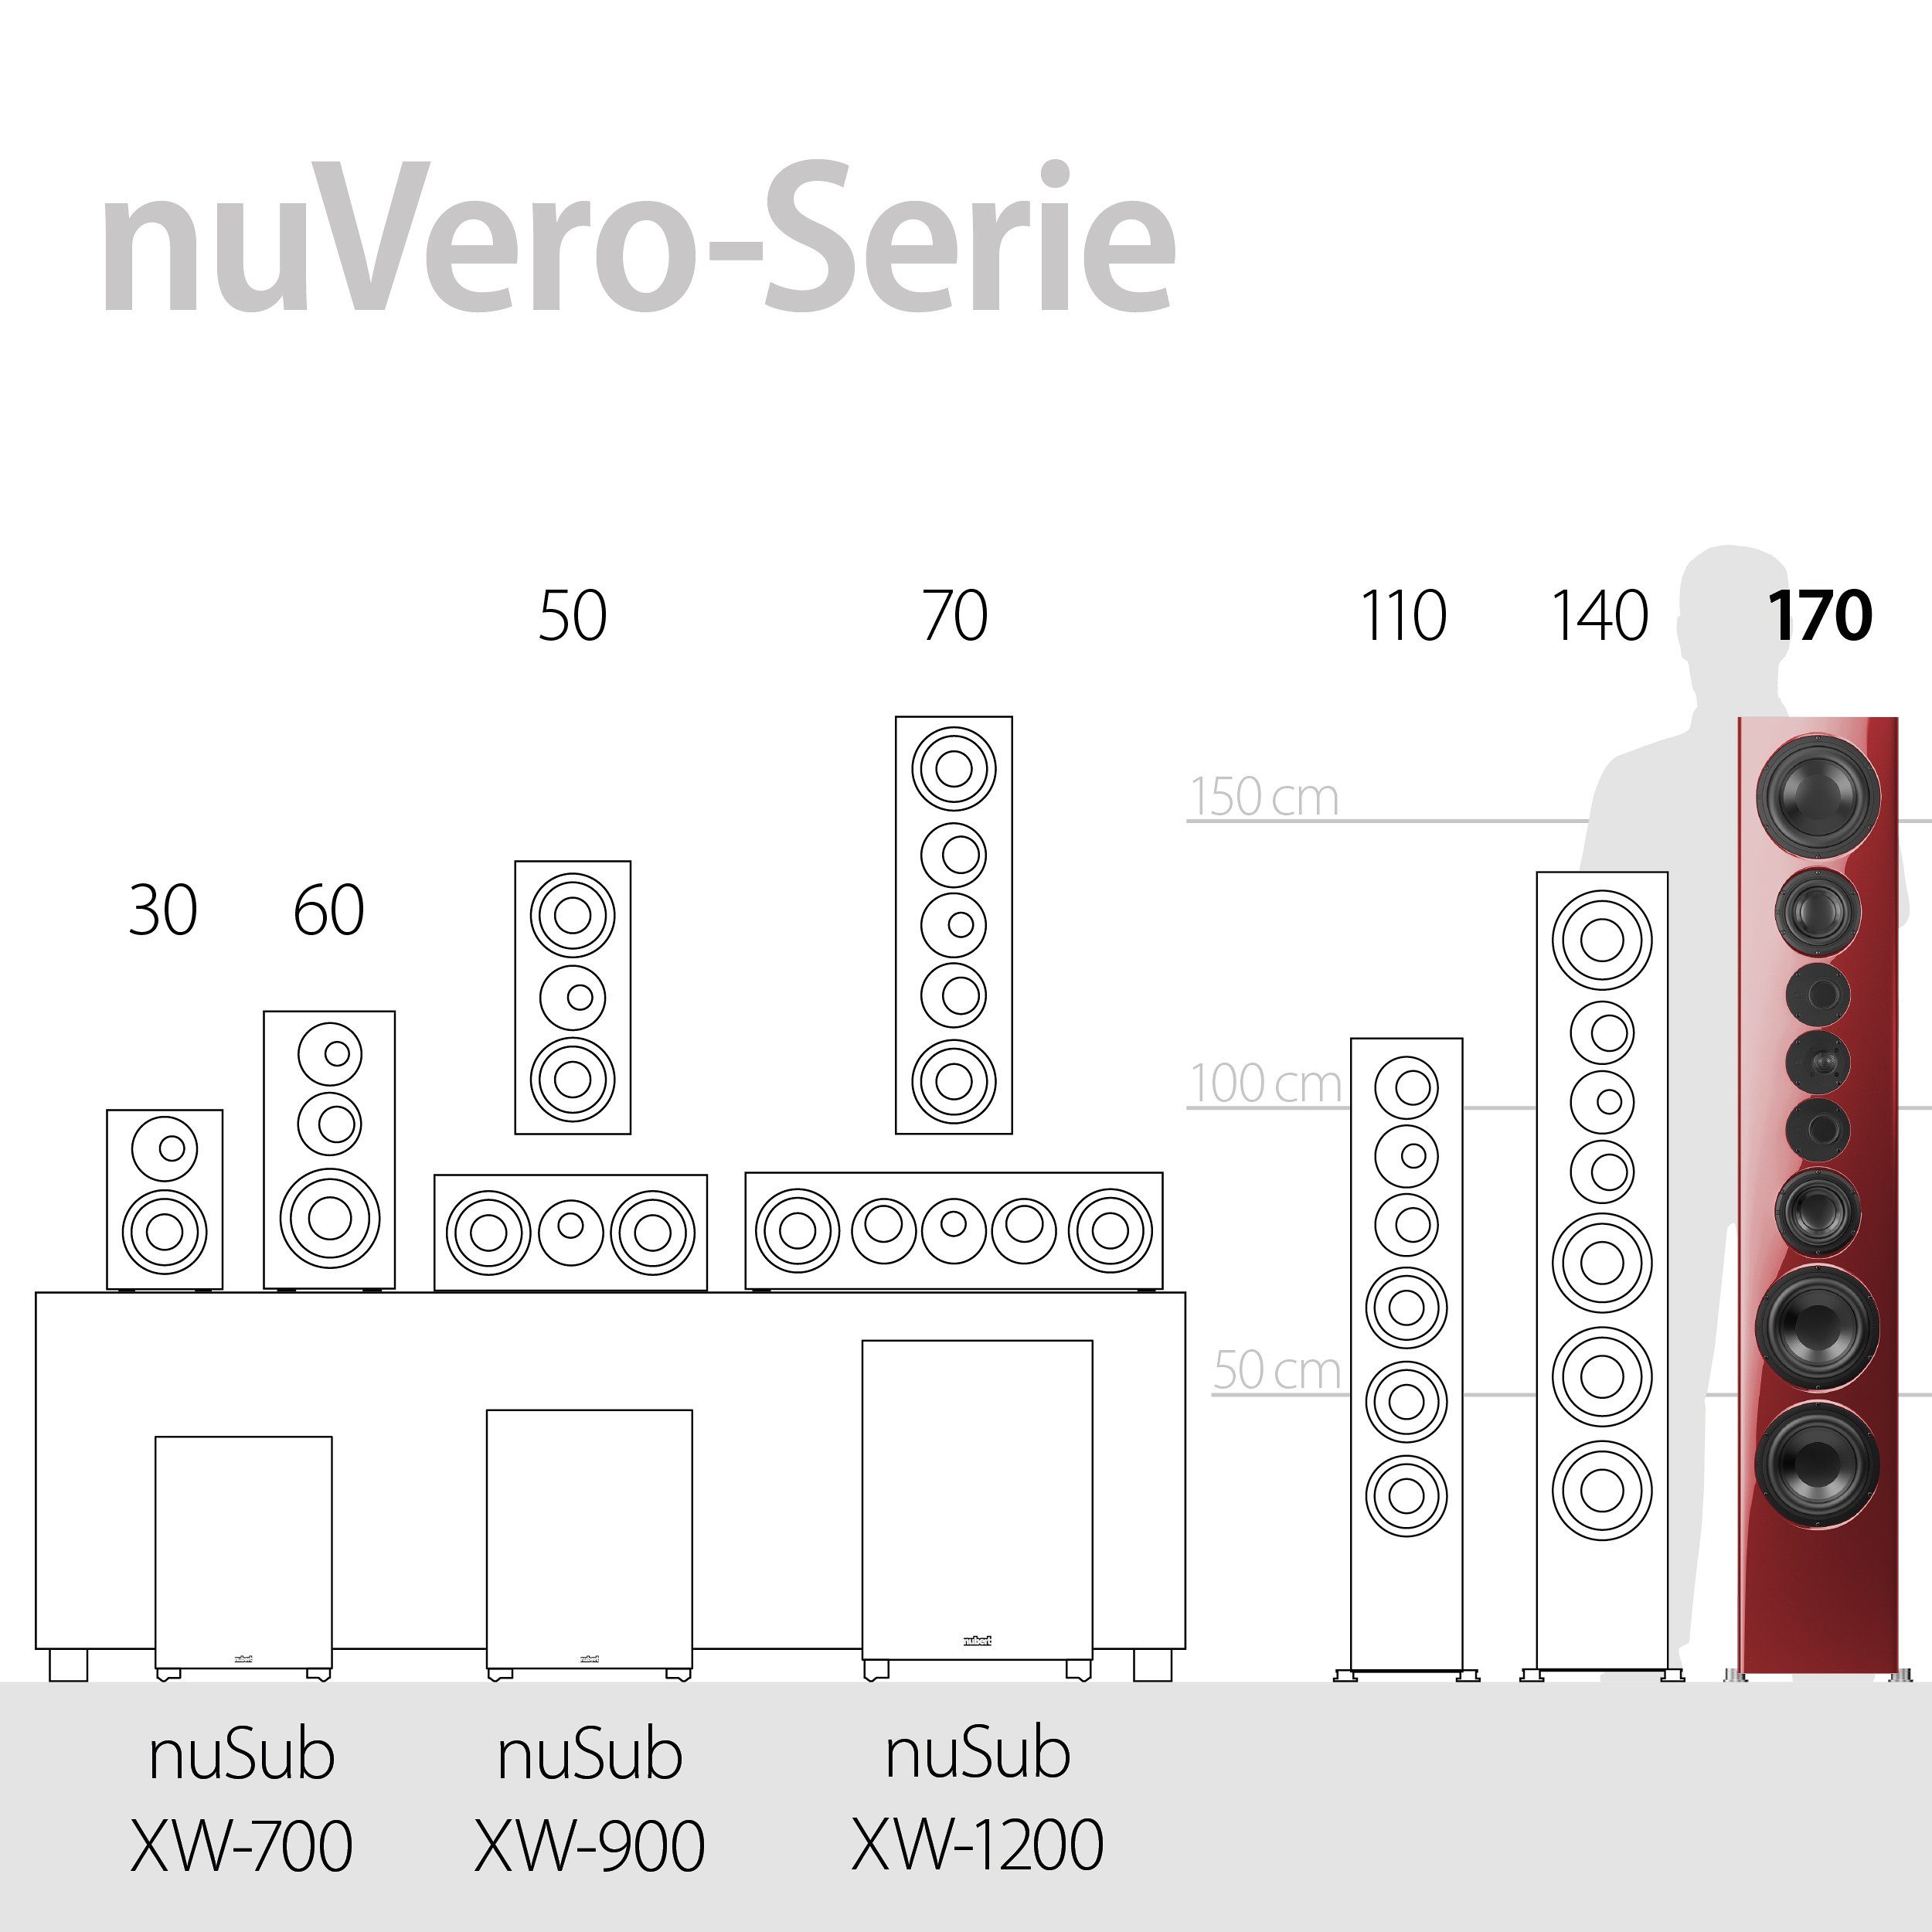 170 nuVero (650 Nubert W) Stand-Lautsprecher Diamantschwarz